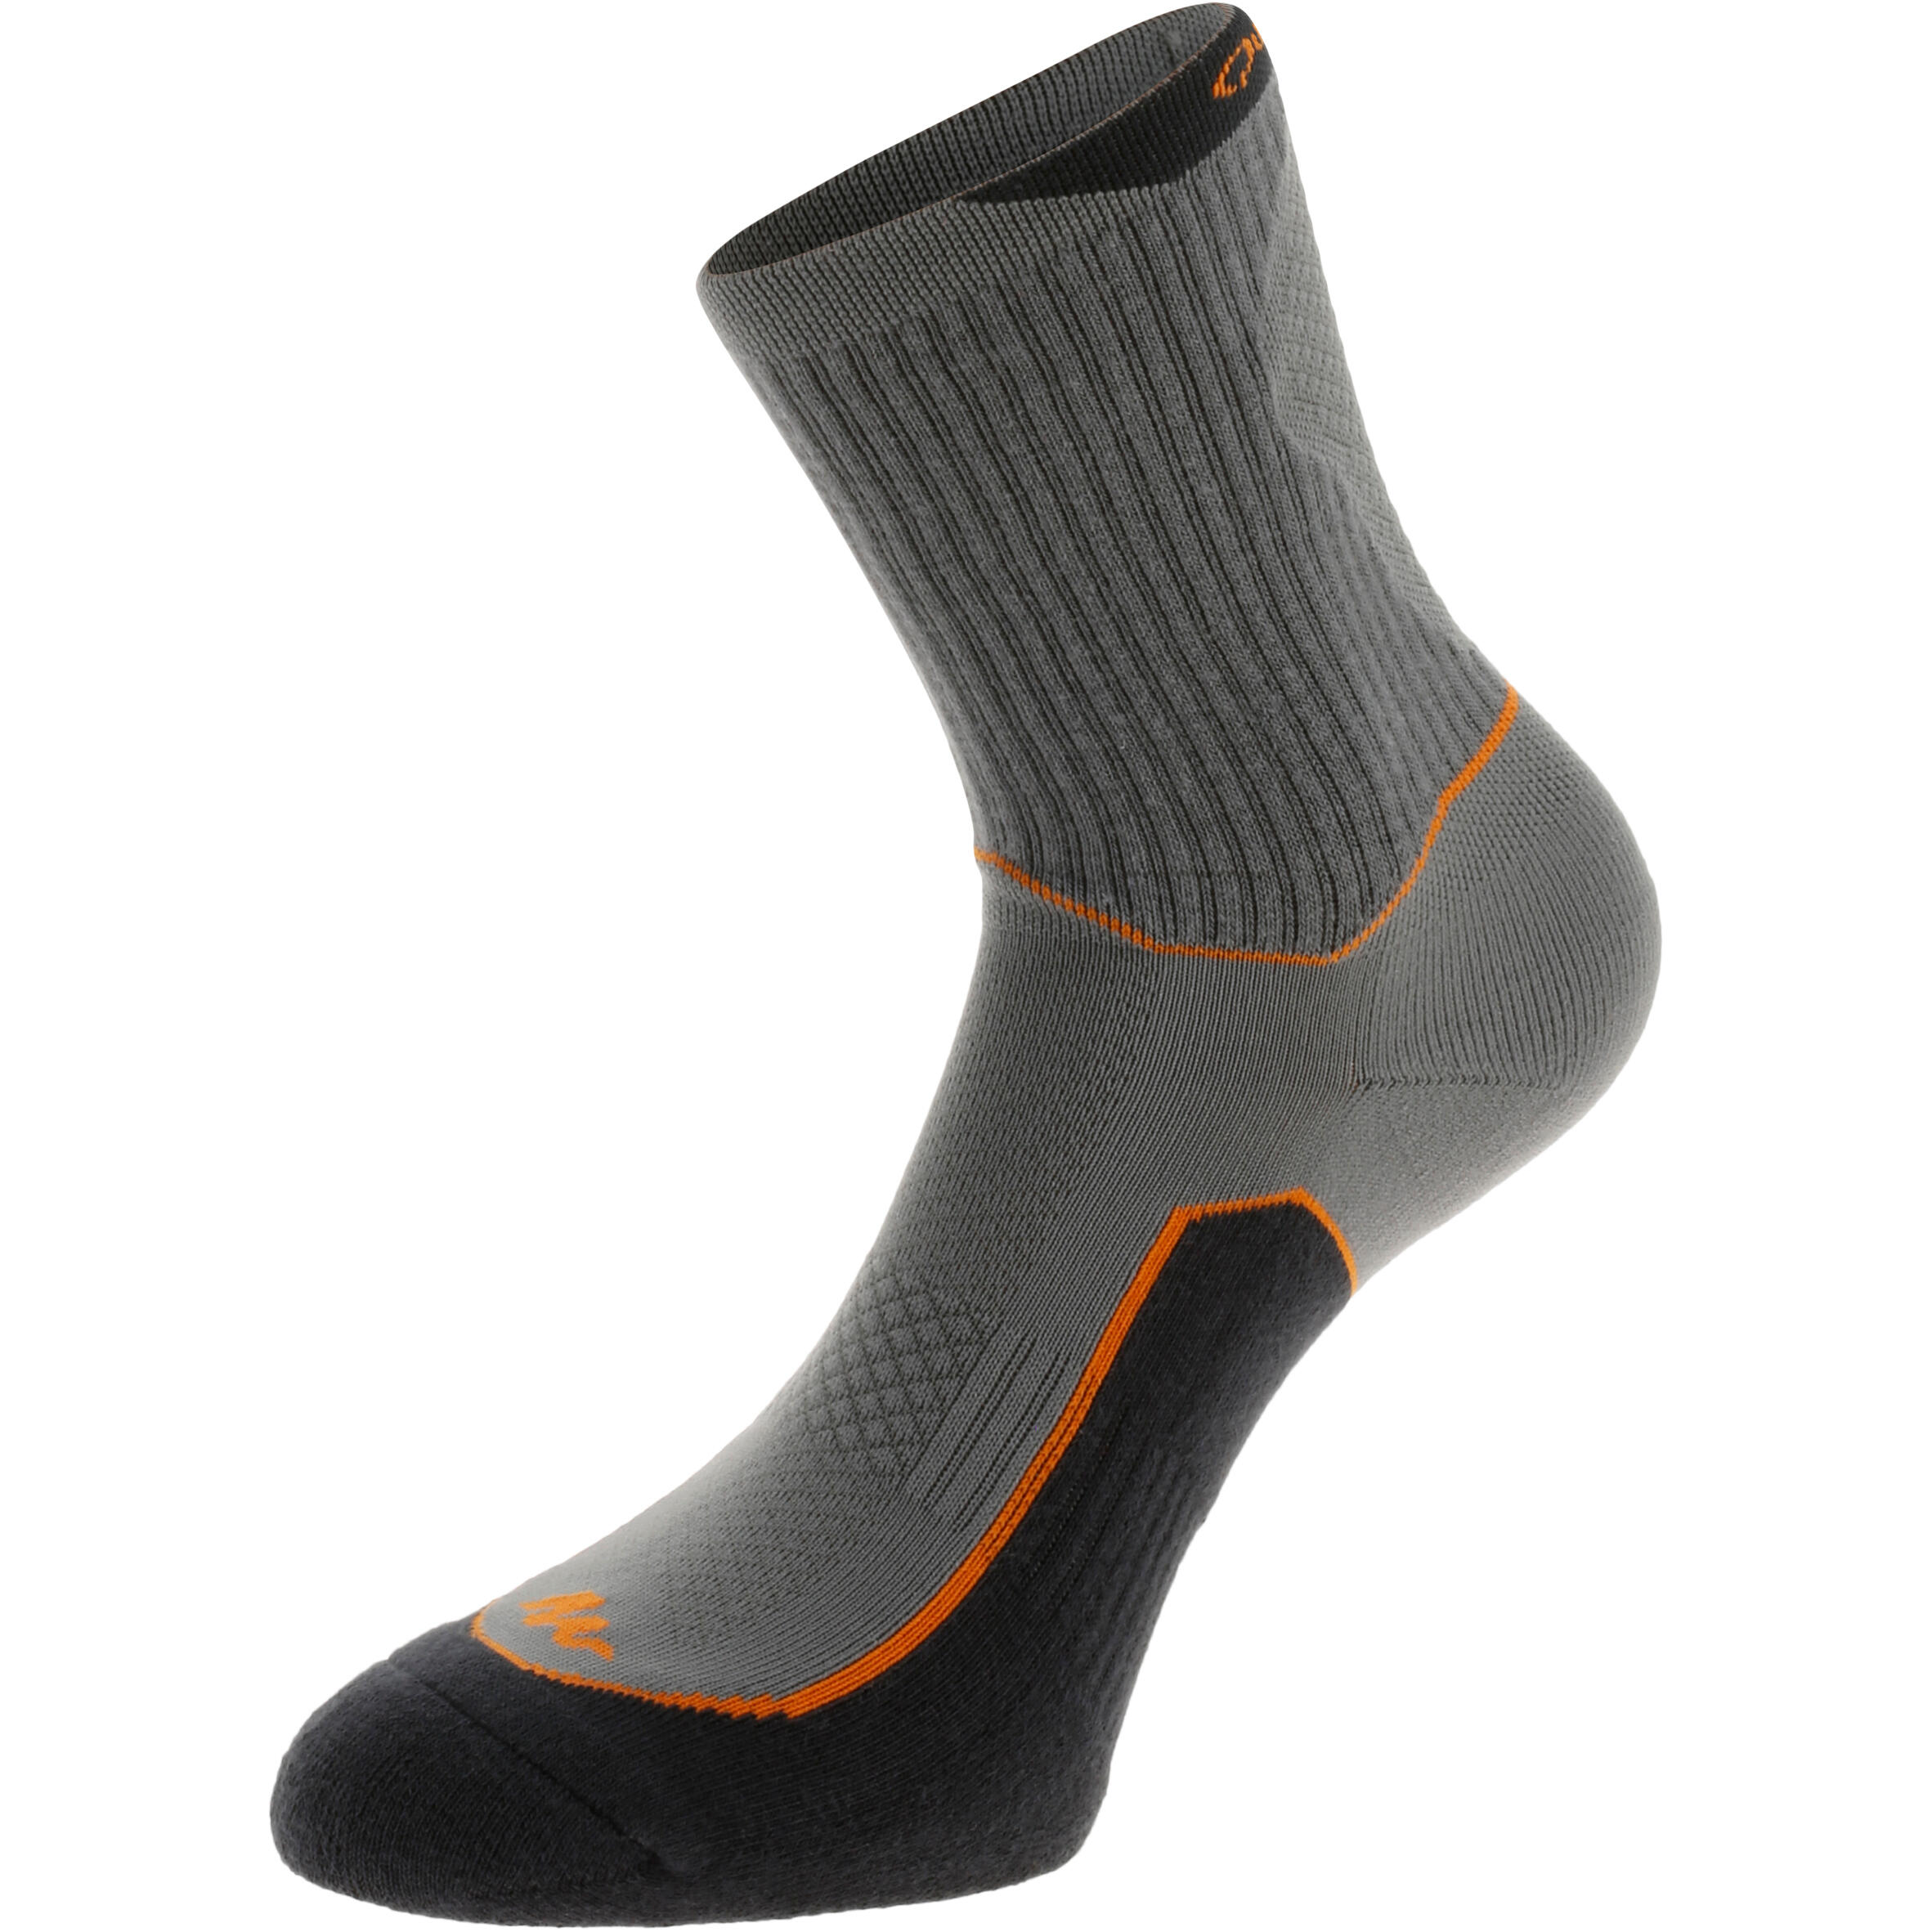 Arpenaz 100 Adult High Top Nature Hiking Socks 2 pairs - Grey 4/8